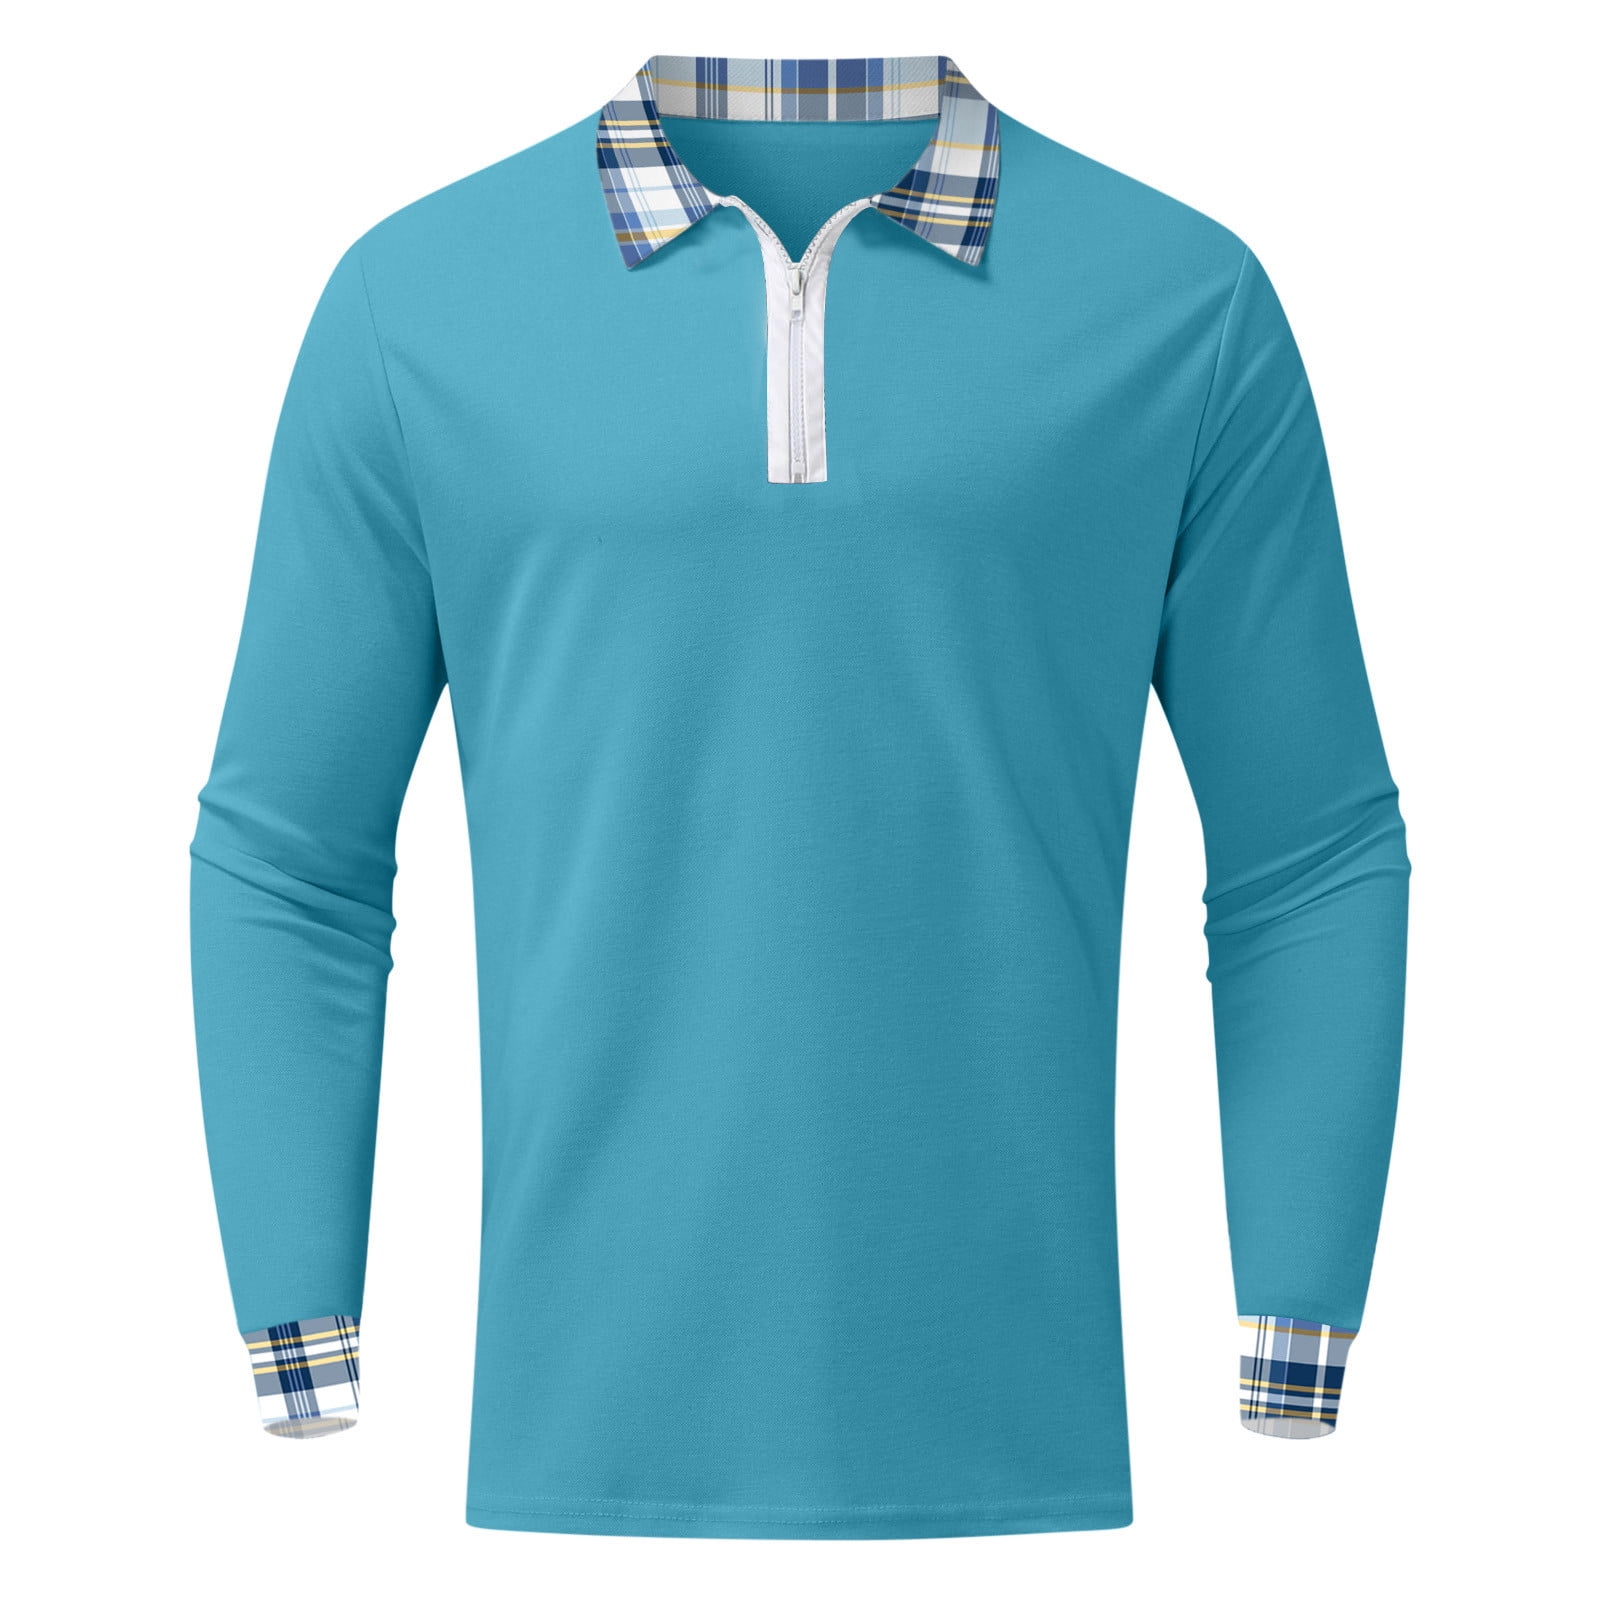 LEEy-world Polo Shirts for Men Men's Polo Shirt Quick Dry Golf Shirt UPF 50  Long and Long Sleeve Tactical Shirts Light Blue,L